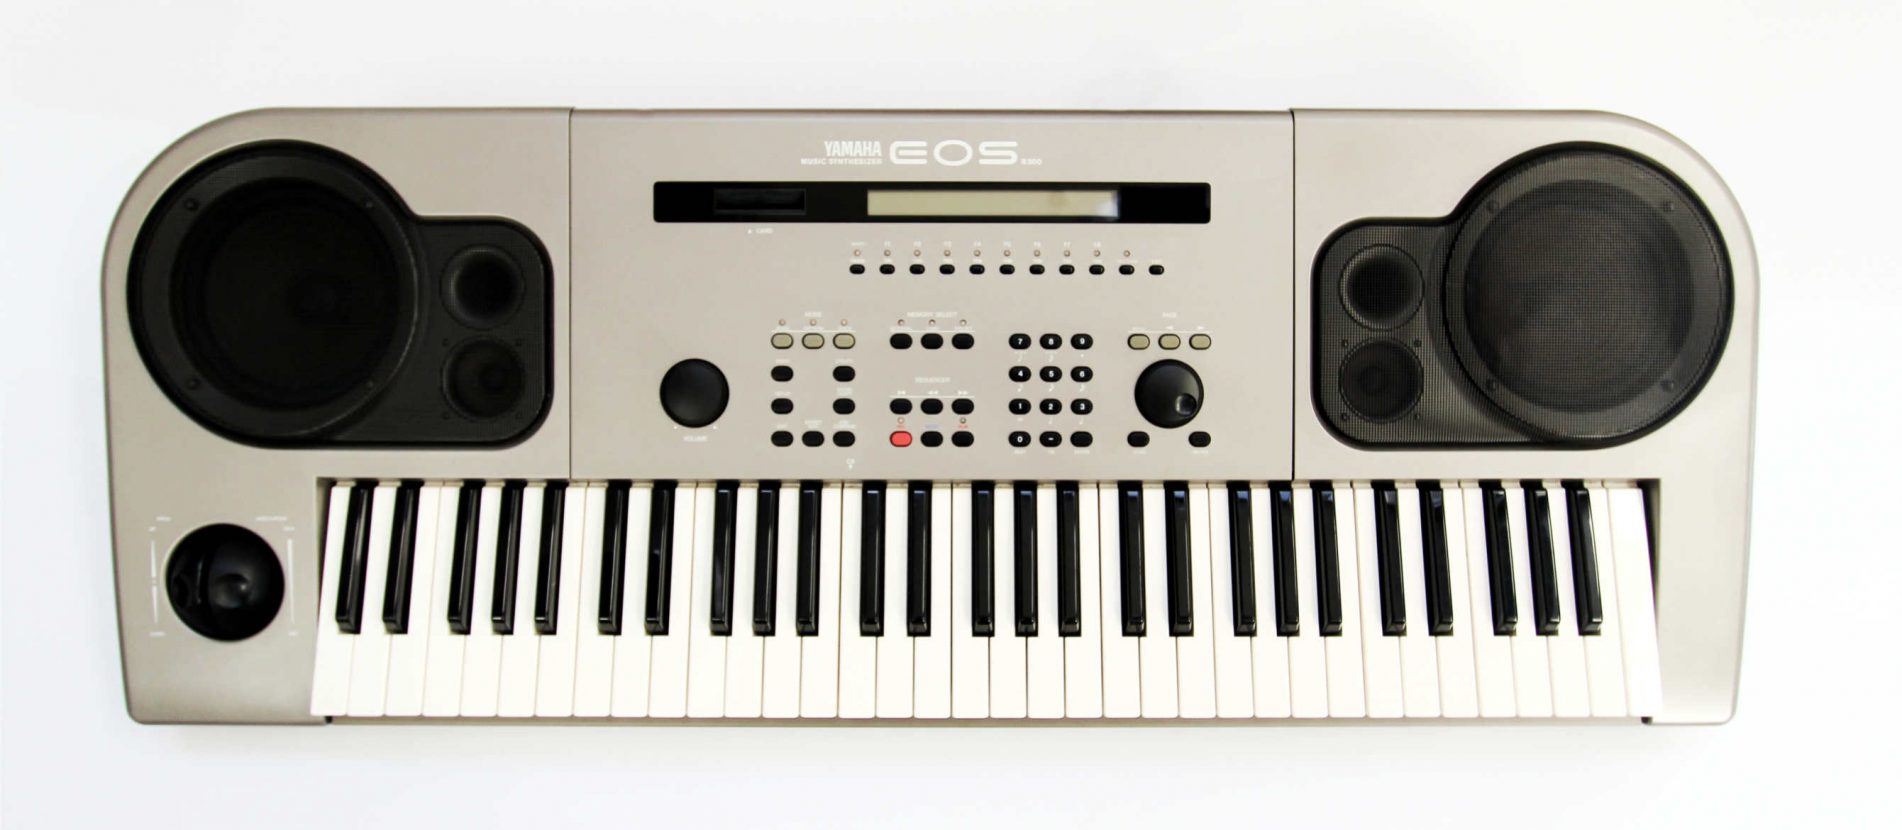 Yamaha B500 EOS Synthesizer (1990) | WOLF FASCINATIONS